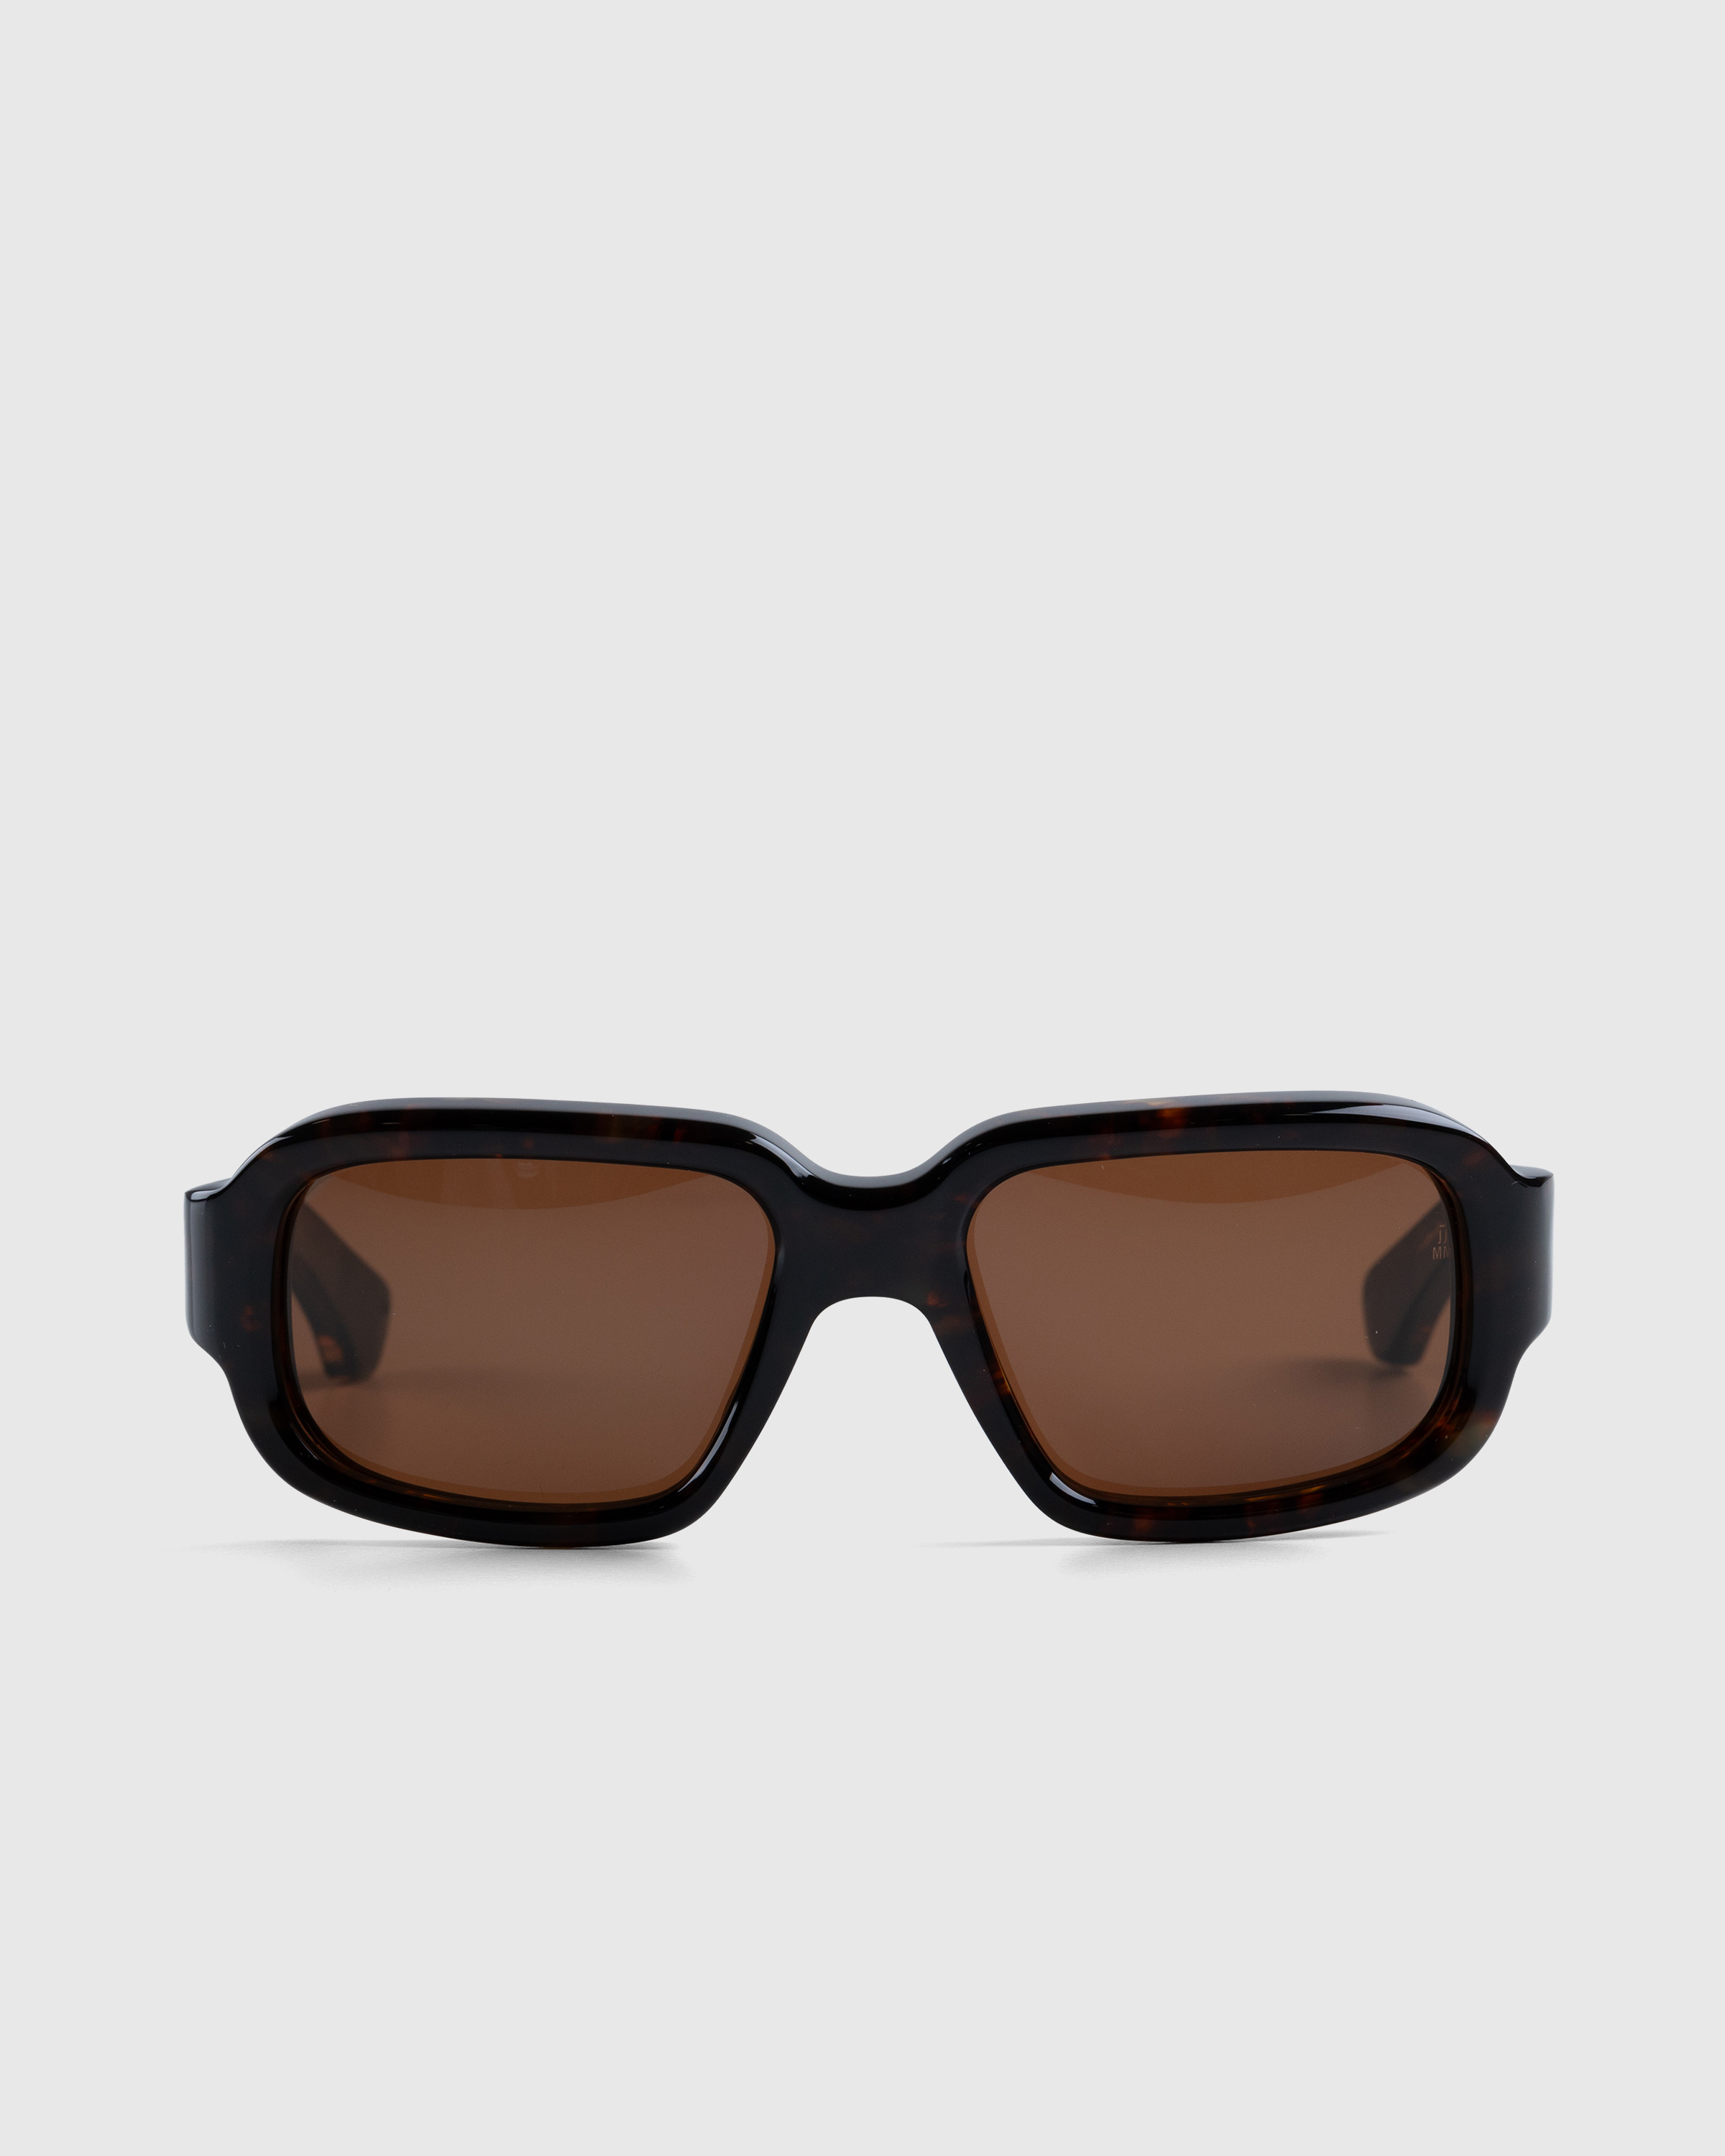 Jacques Marie Mage – Nakahira Agar - Sunglasses - Brown - Image 1